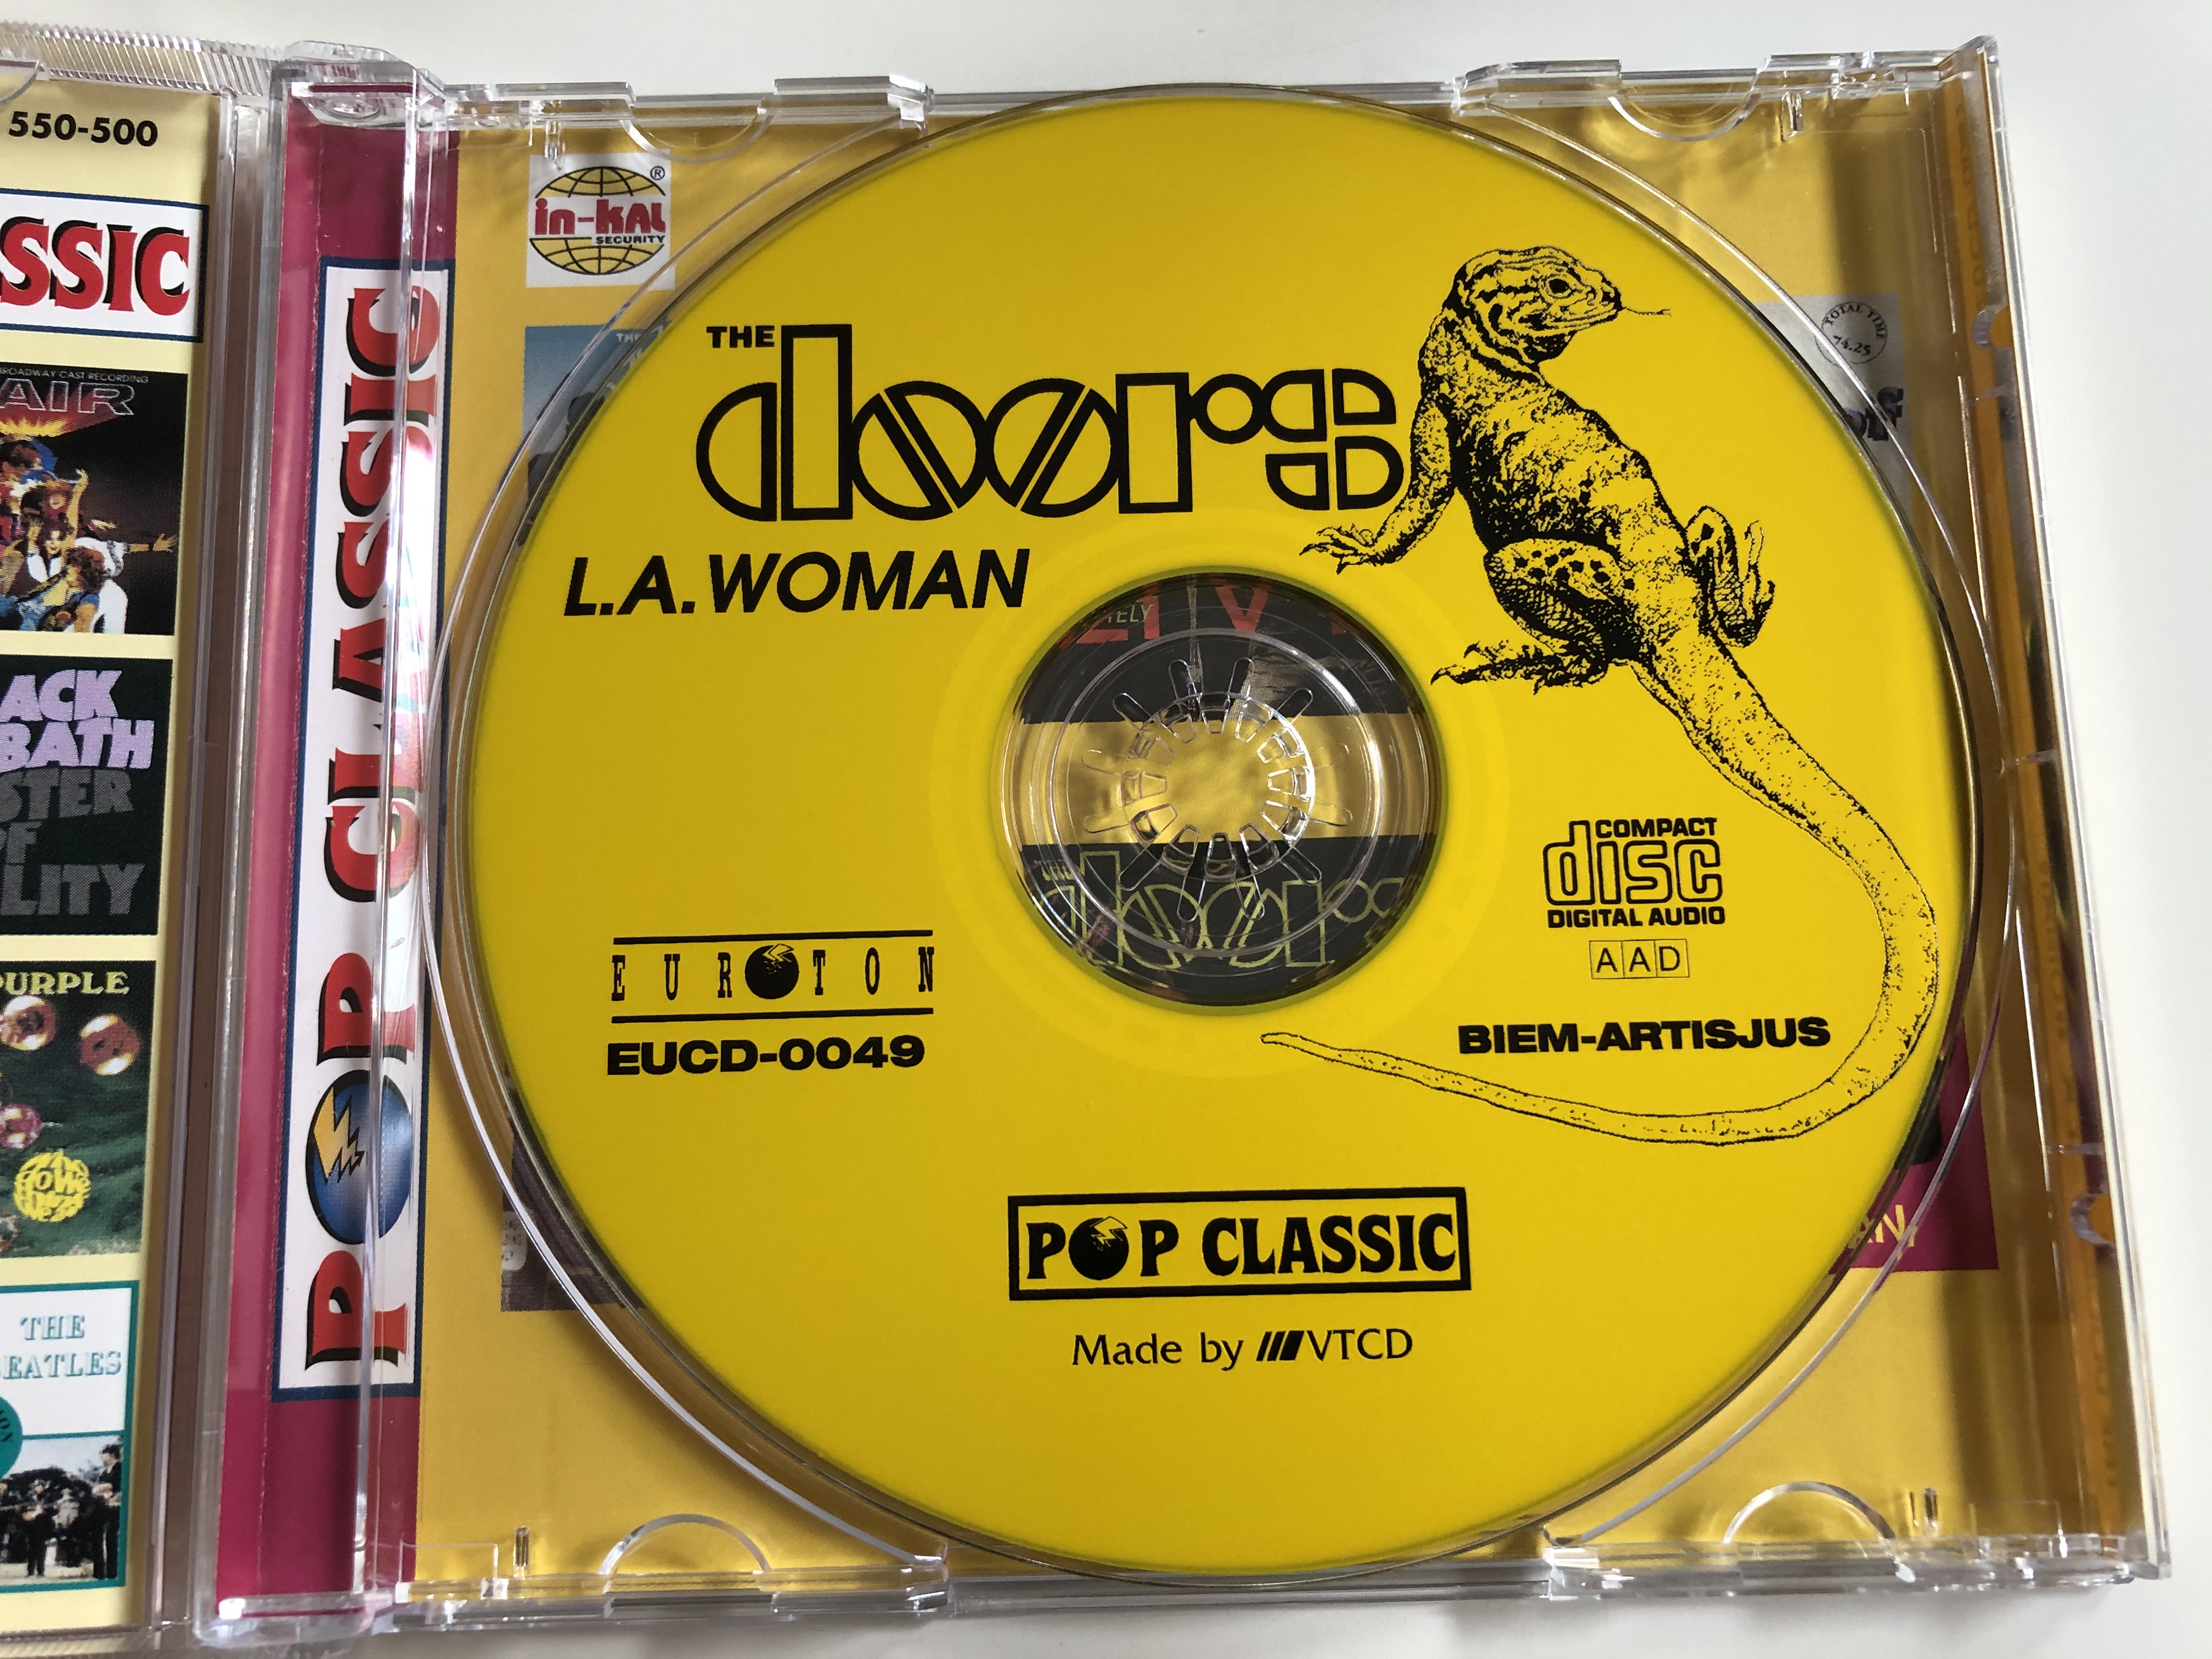 the-doors-l.a.-woman-pop-classic-euroton-audio-cd-eucd-0049-2-.jpg